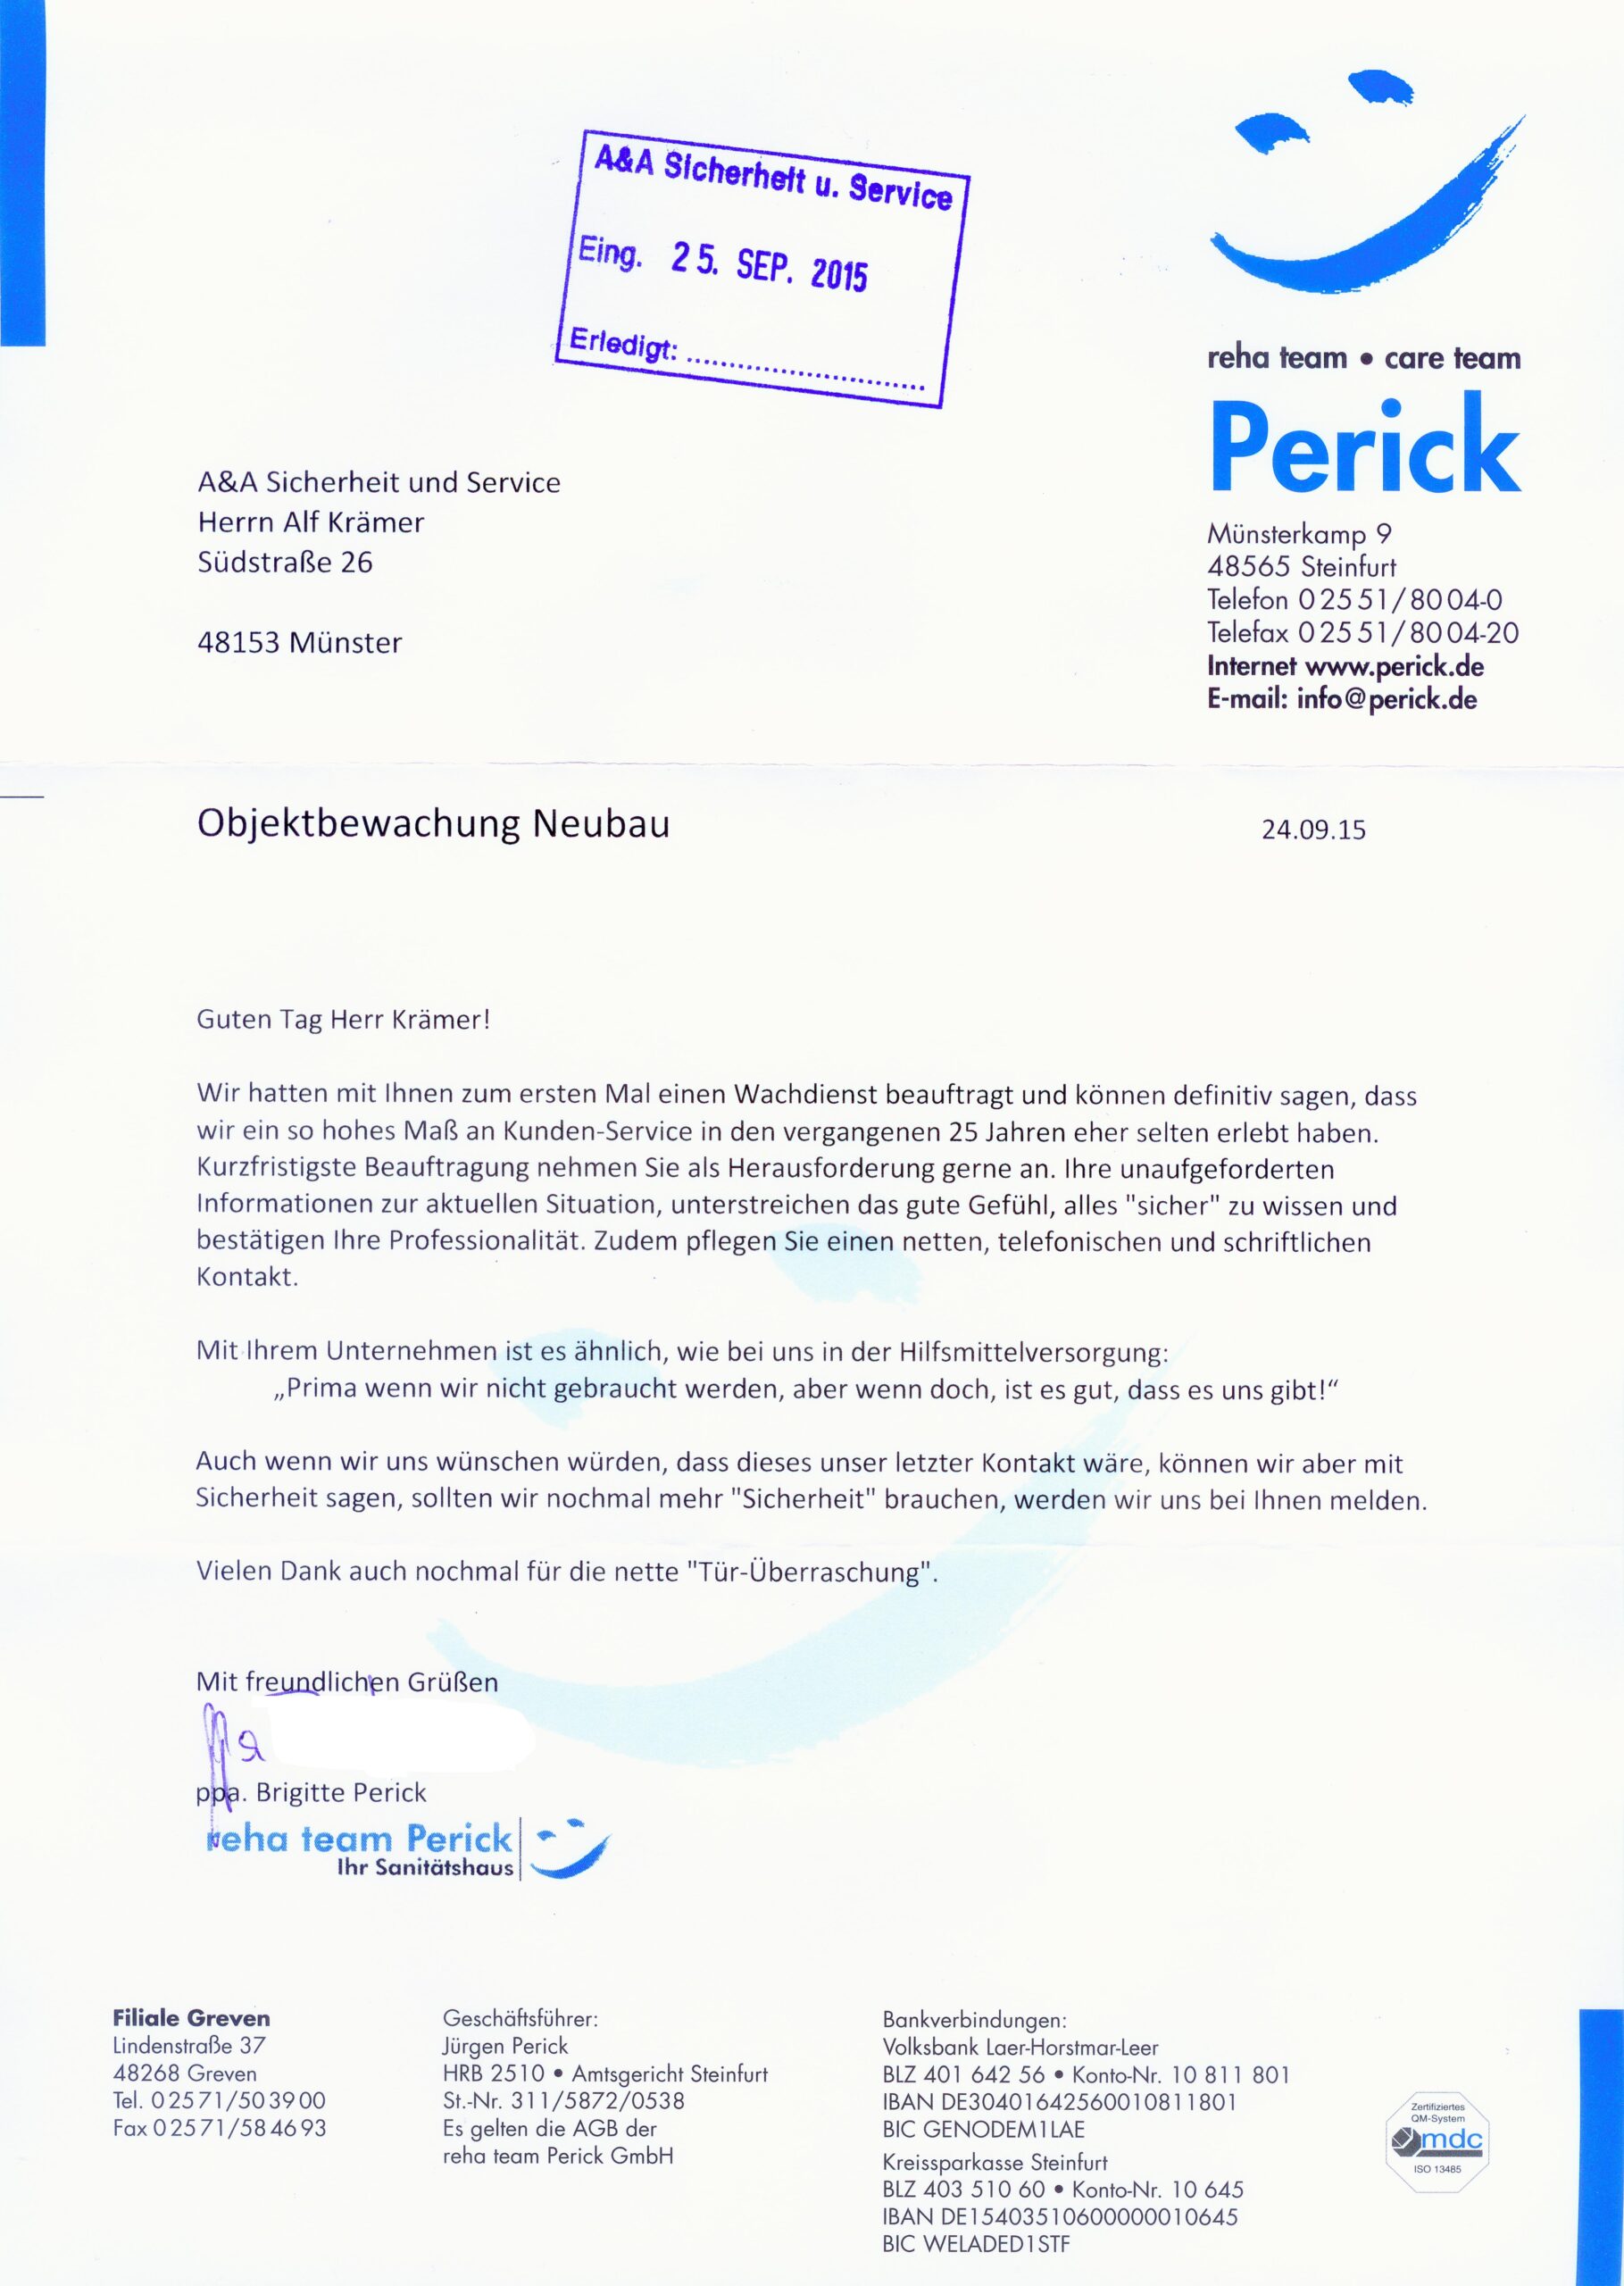 Referenzschreiben reha-team Perick GmbH Steinfurt - Baustellenbewachung 2015 - A&A Sicherheit und Service